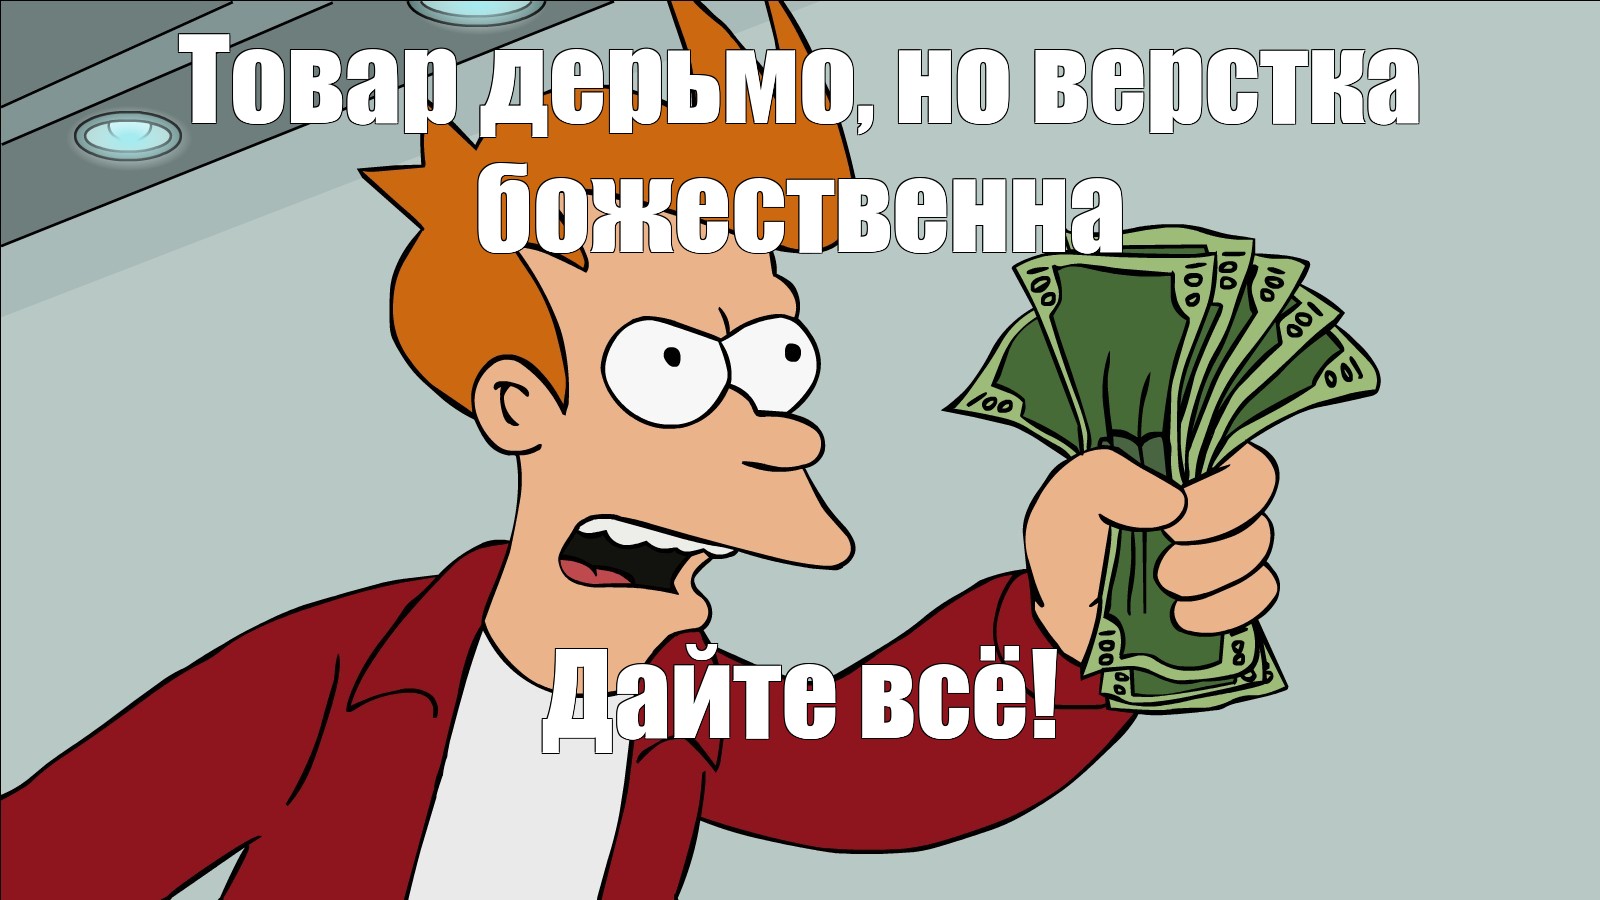 Money meme. Фрай shut up and take my money. Фрай Футурама Мем с деньгами. Деньги Мем. Shut up and take my money Мем.